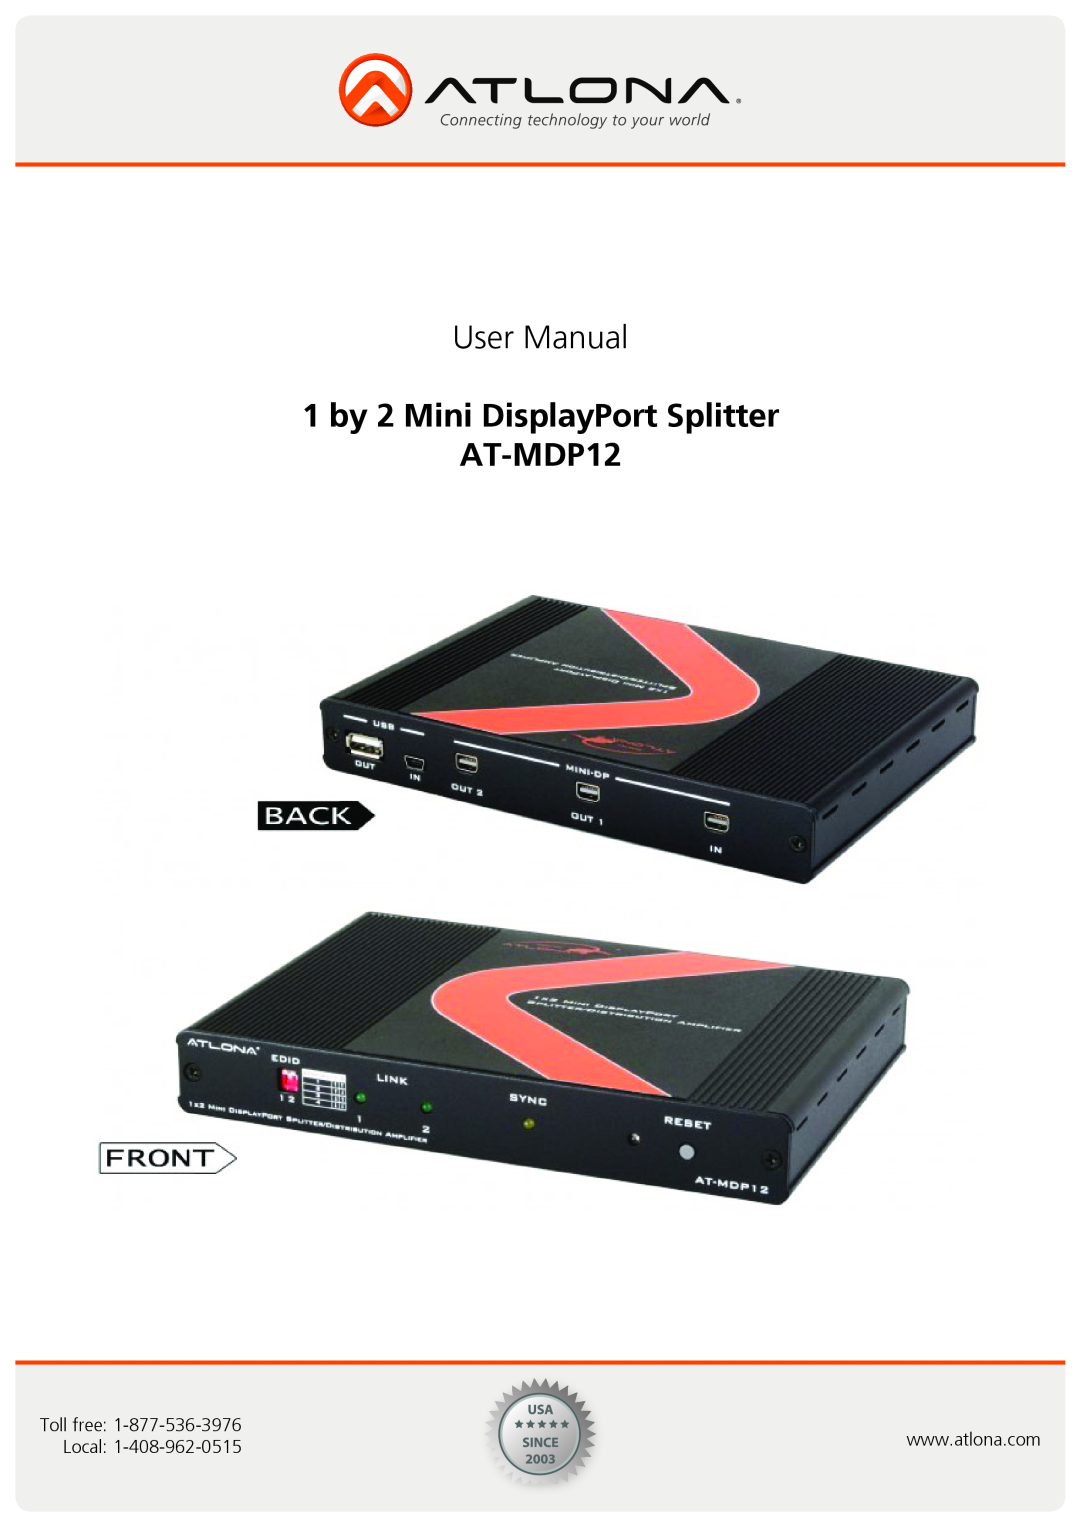 Atlona user manual 1 by 2 Mini DisplayPort Splitter AT-MDP12 